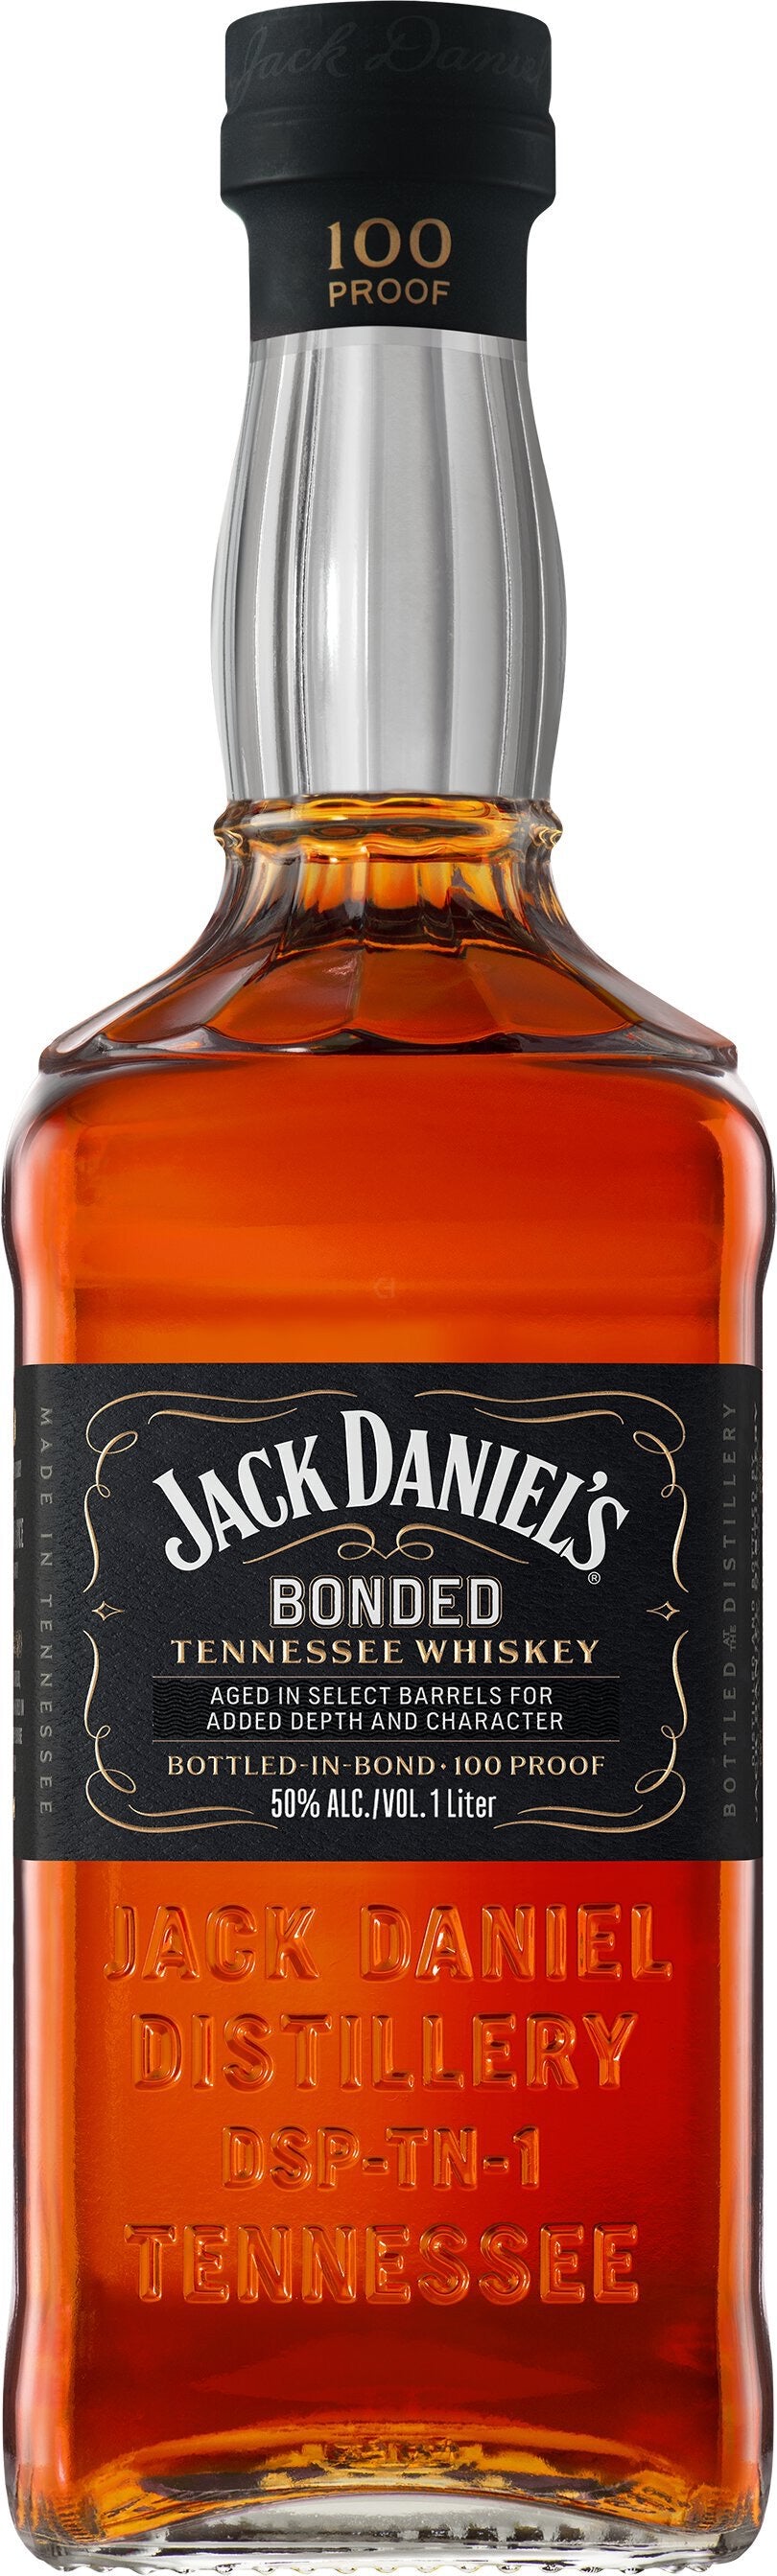 Whisky Jack Daniels n˚7 1 Litro